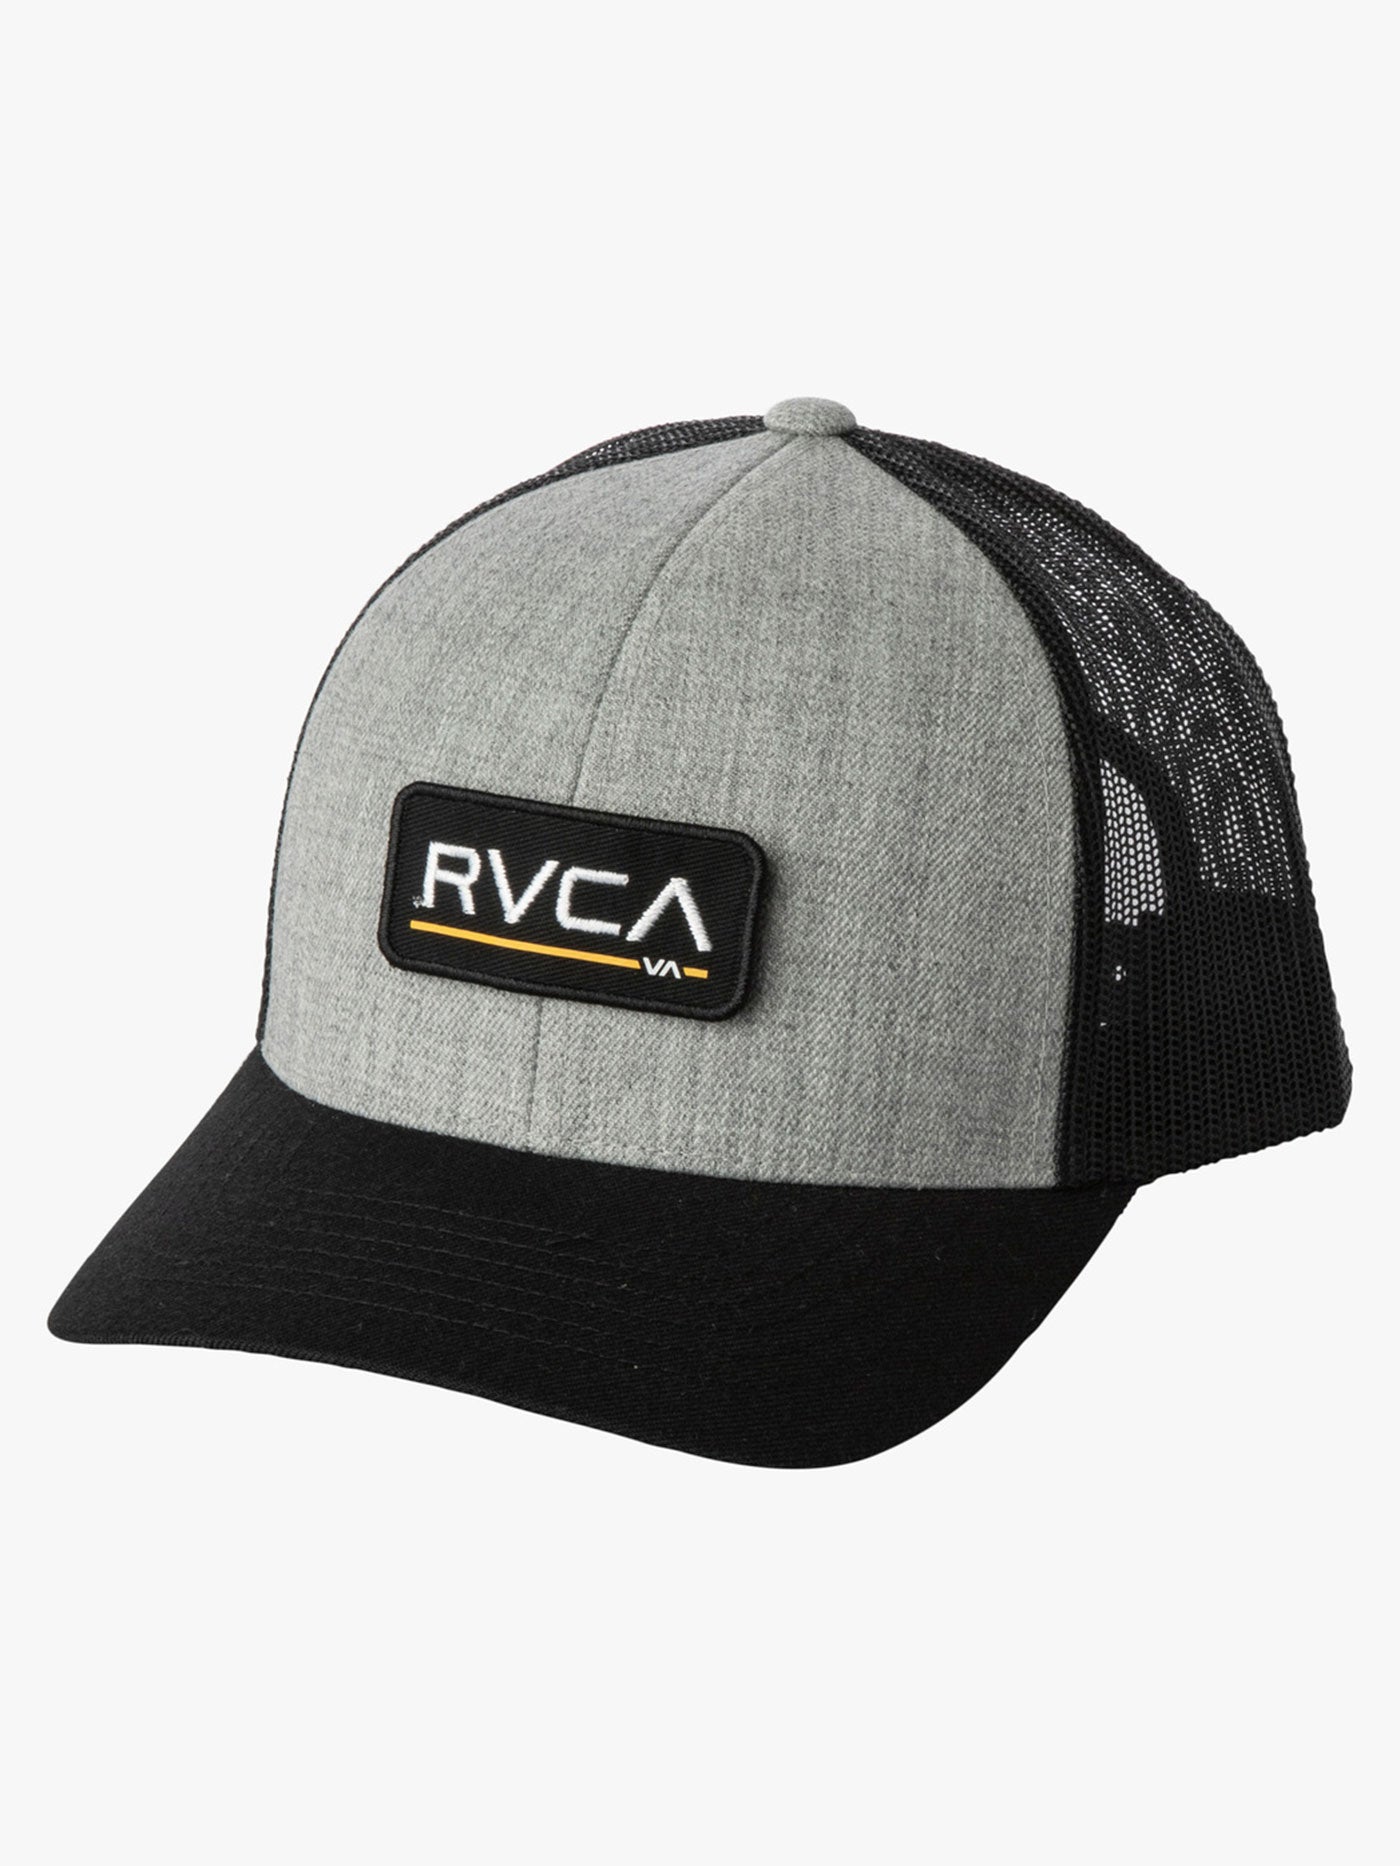 RVCA Ticket III Trucker Snapback Hat